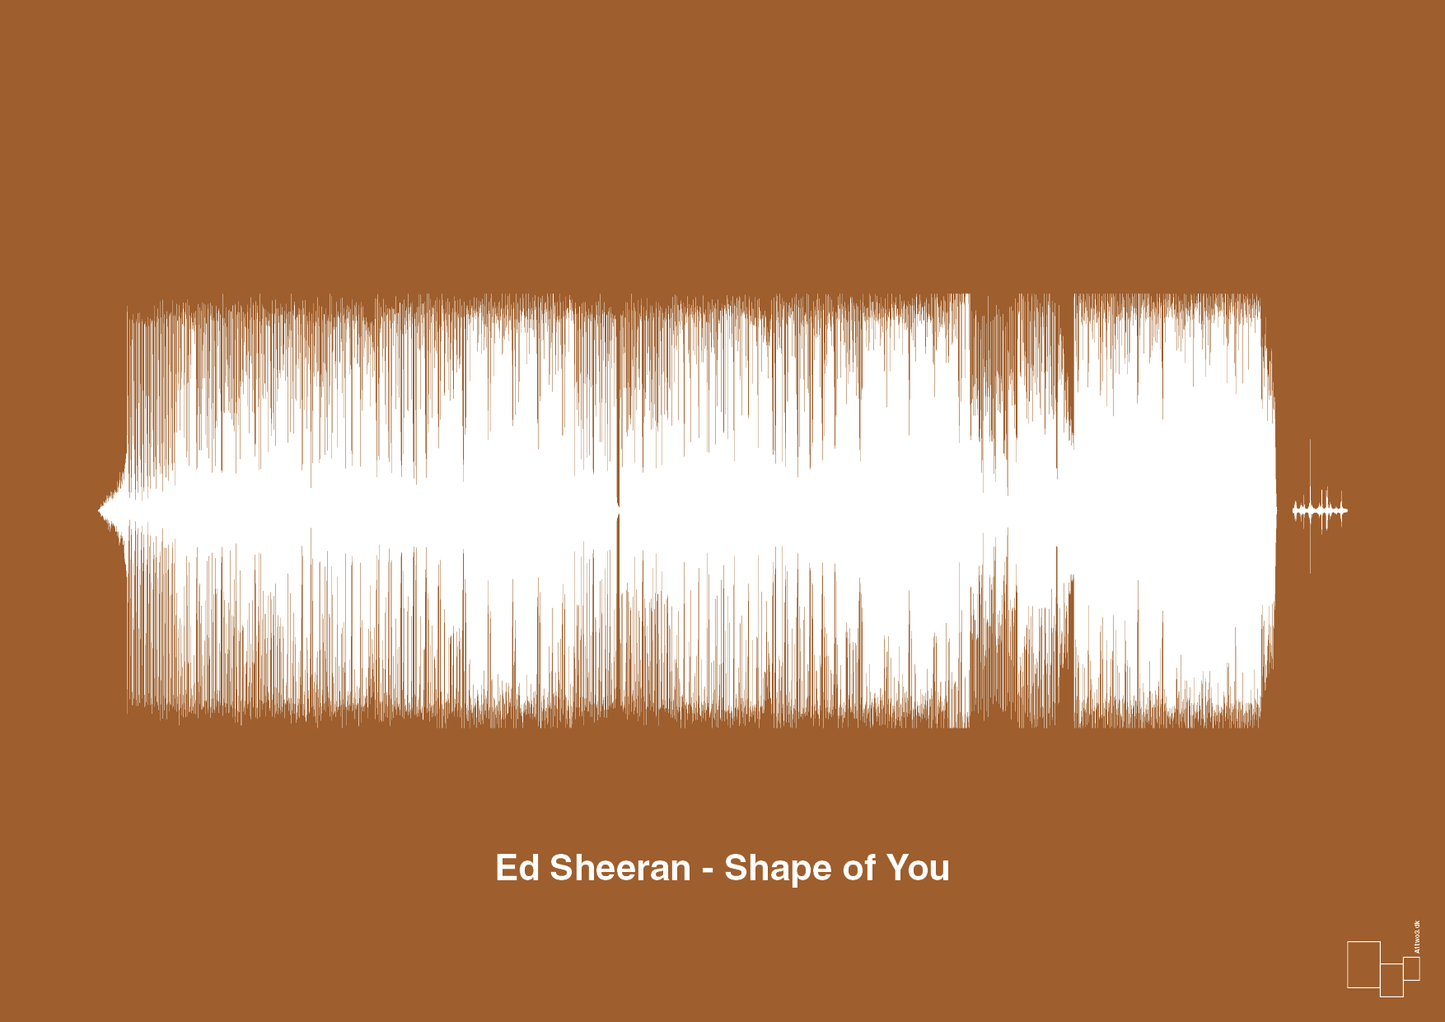 ed sheeran - shape of you - Plakat med Musik i Cognac